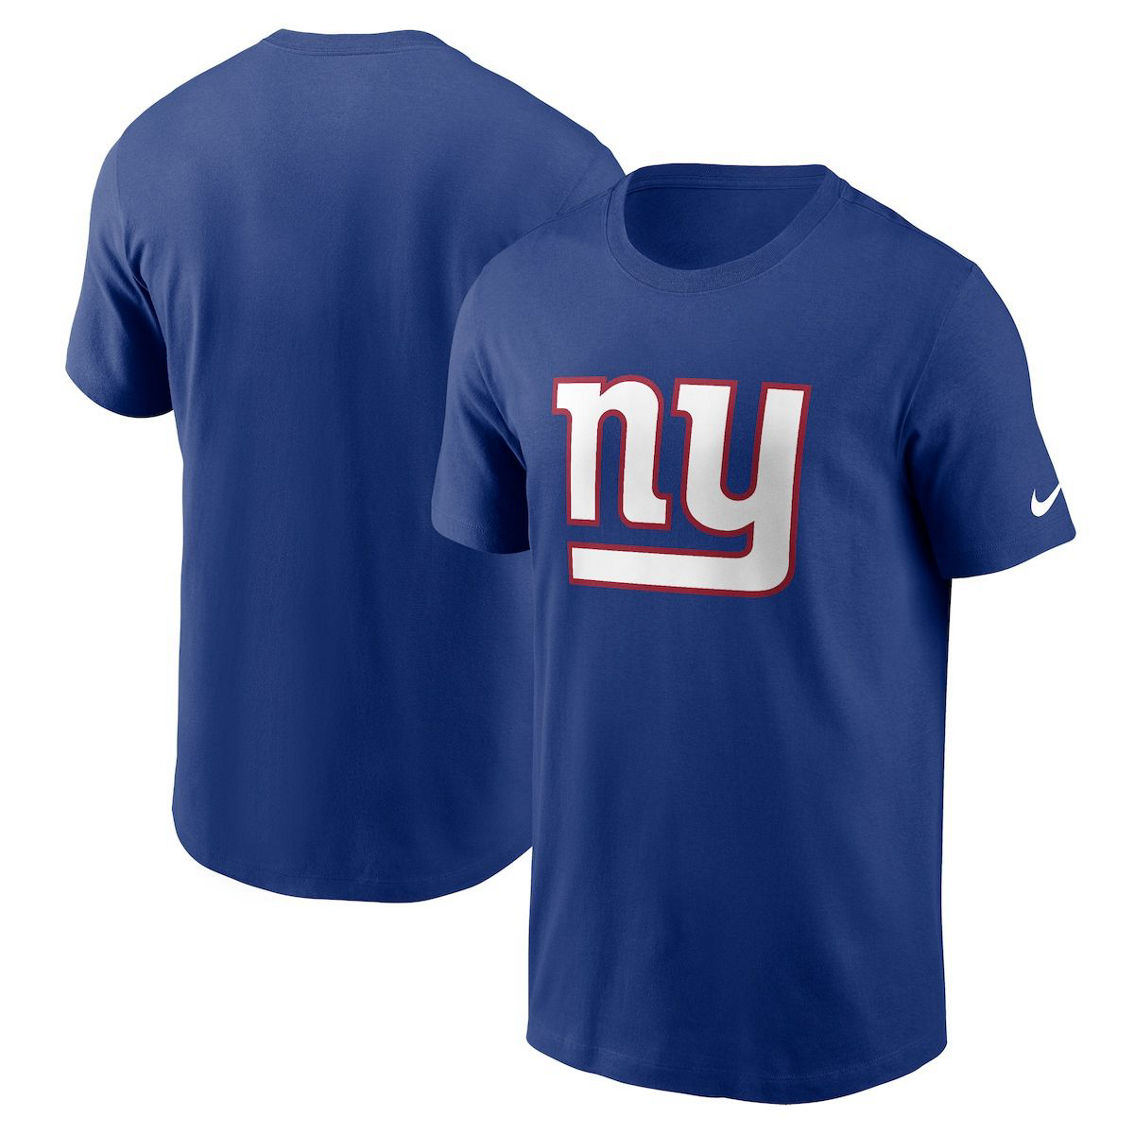 Nike Men's Royal New York Giants Primary Logo T-Shirt - Image 2 of 4